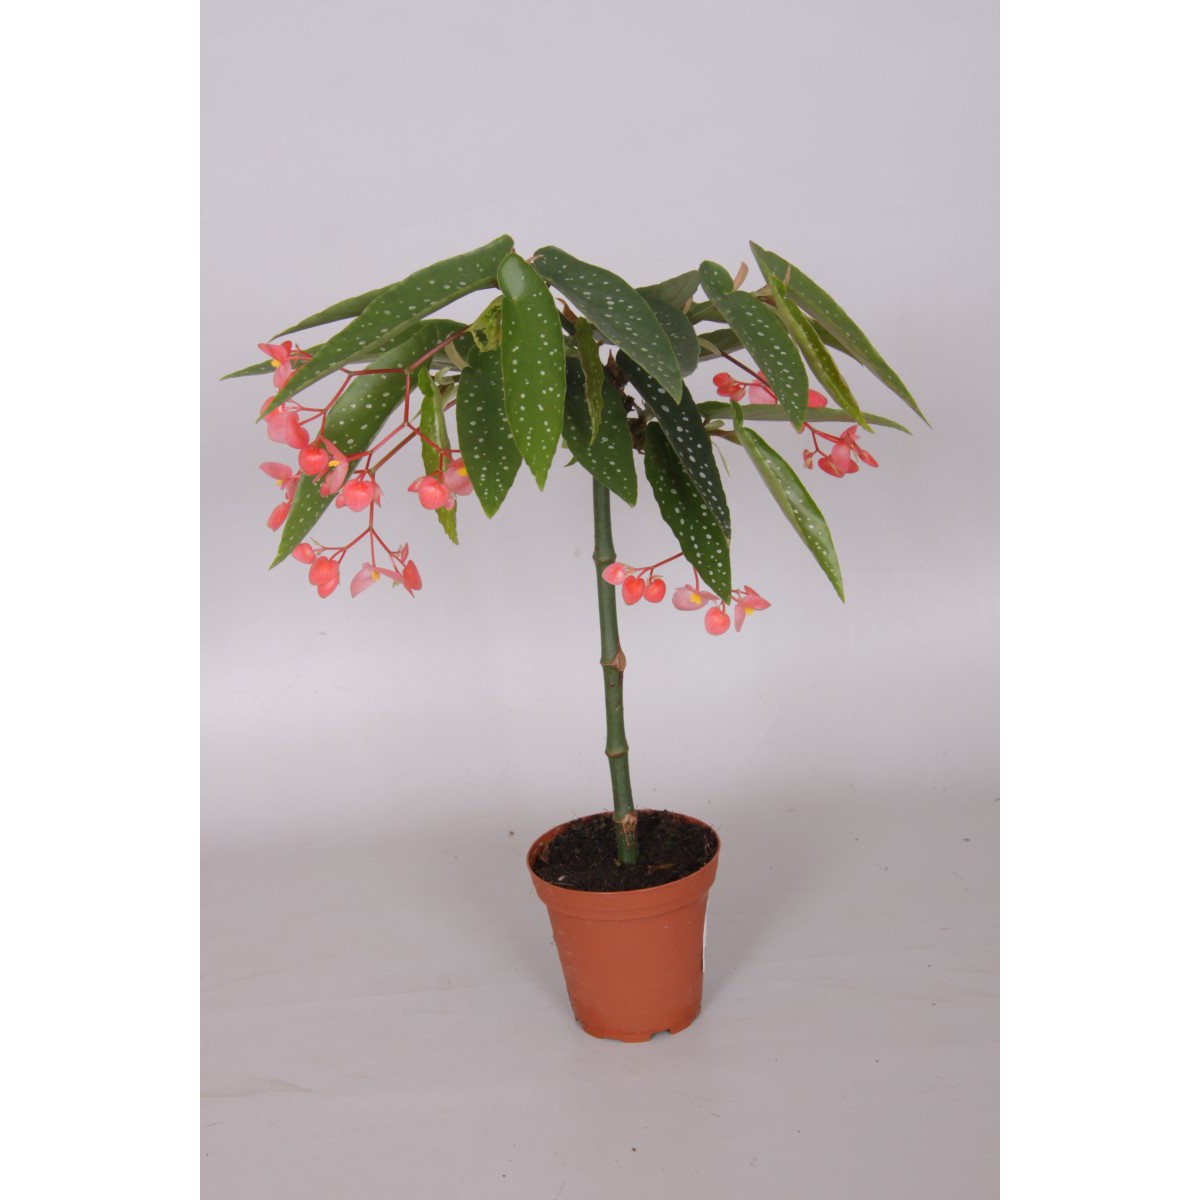   Begonia tamaya ®  Pot de 9 cm h30